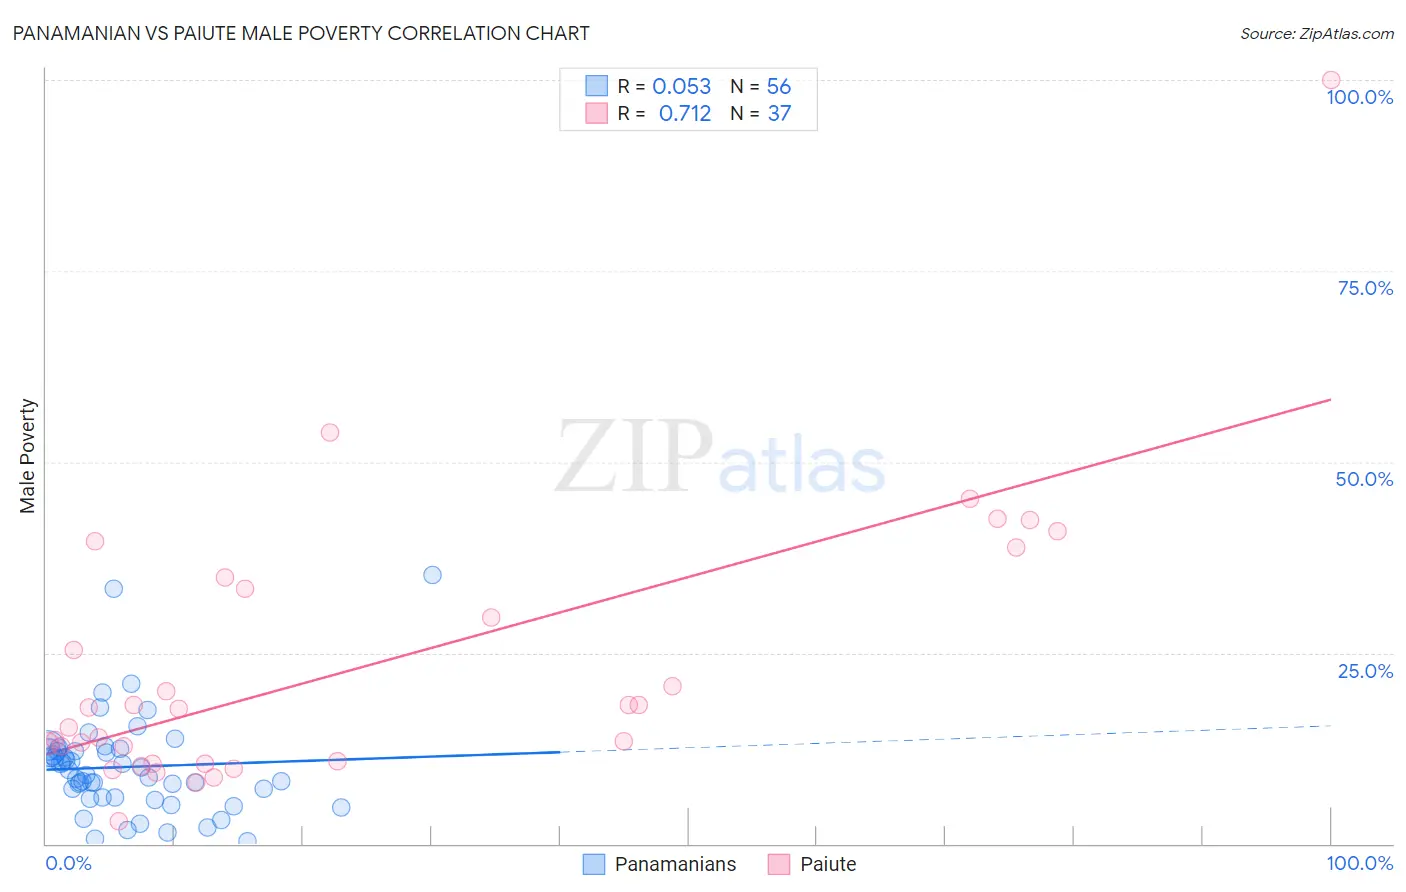 Panamanian vs Paiute Male Poverty